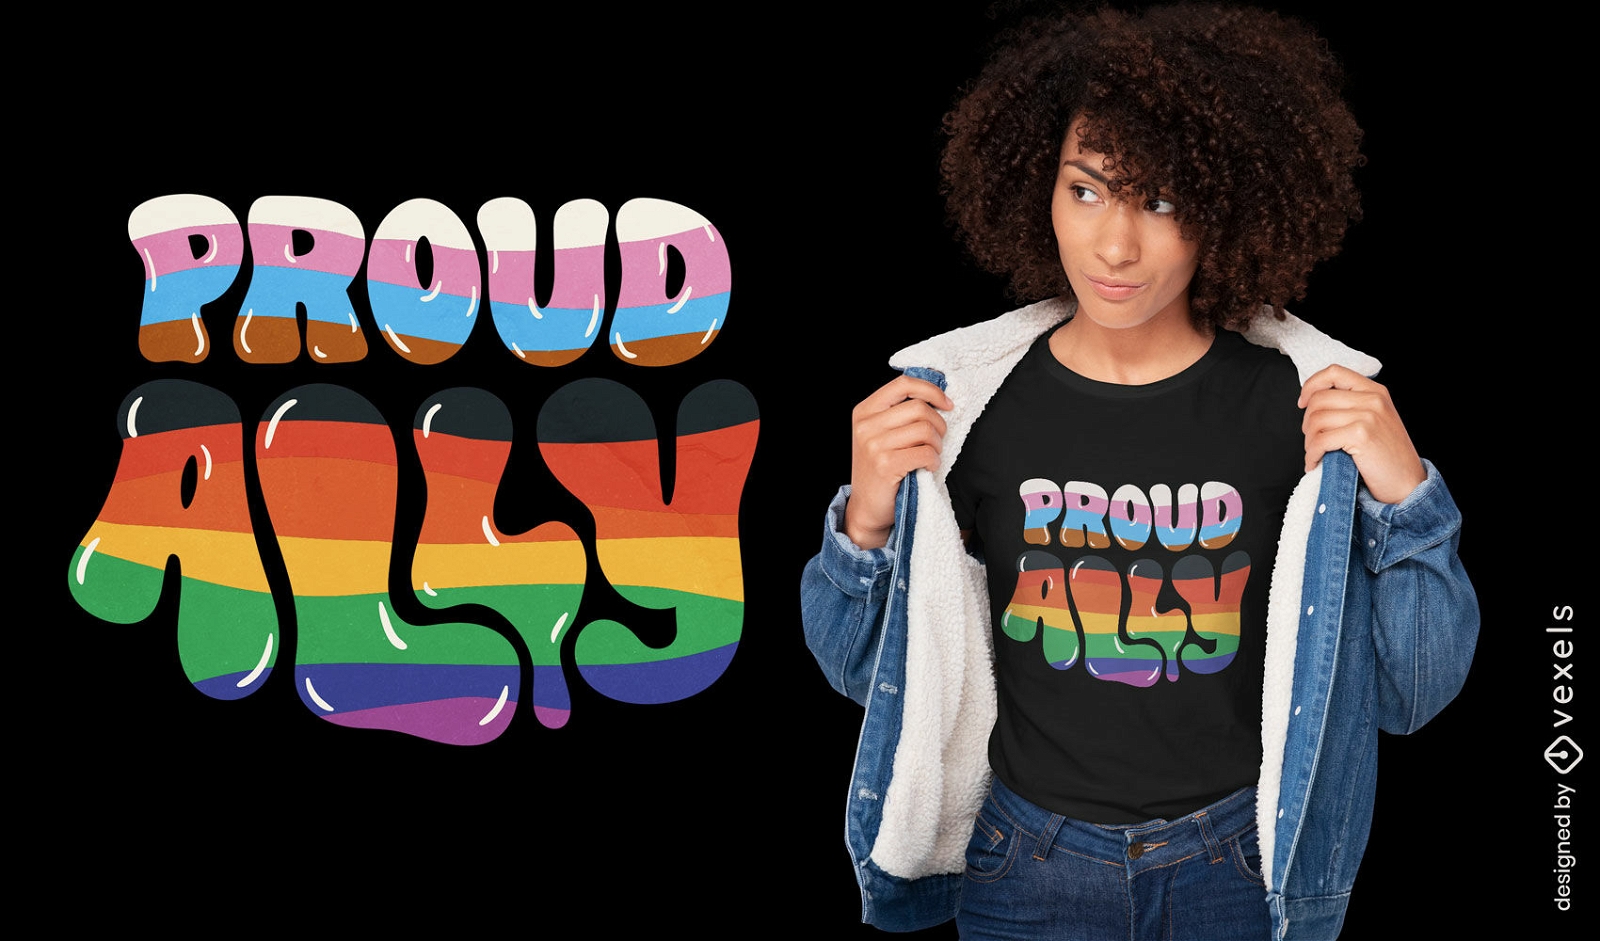 Pride ally quote t-shirt design